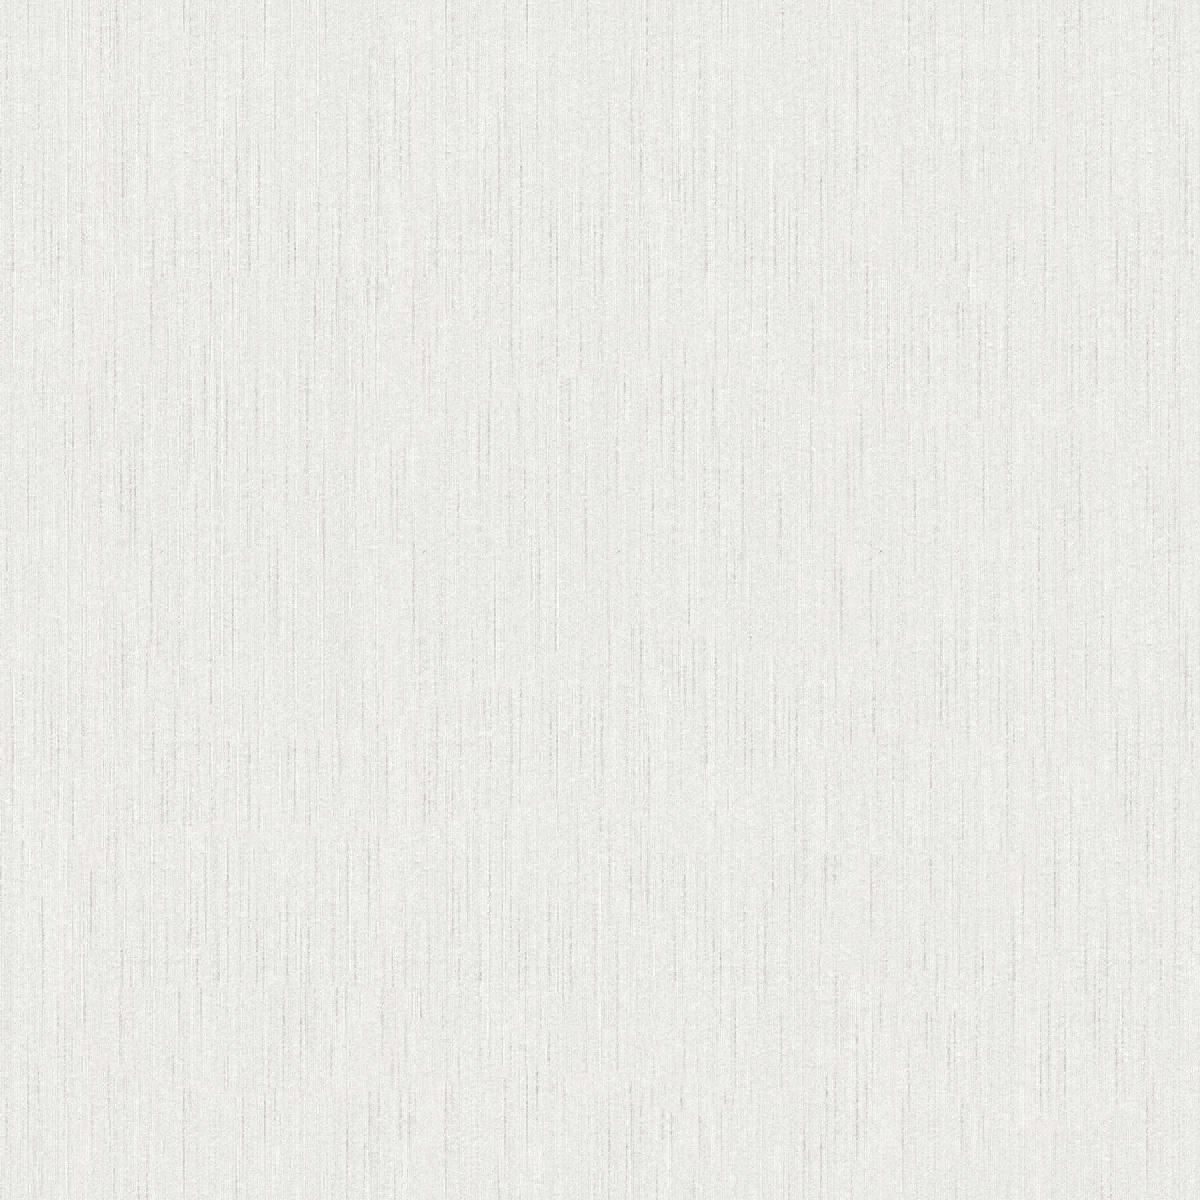 Vliestapete AP Finest 968616 - einfarbige Tapete Muster - Weiß